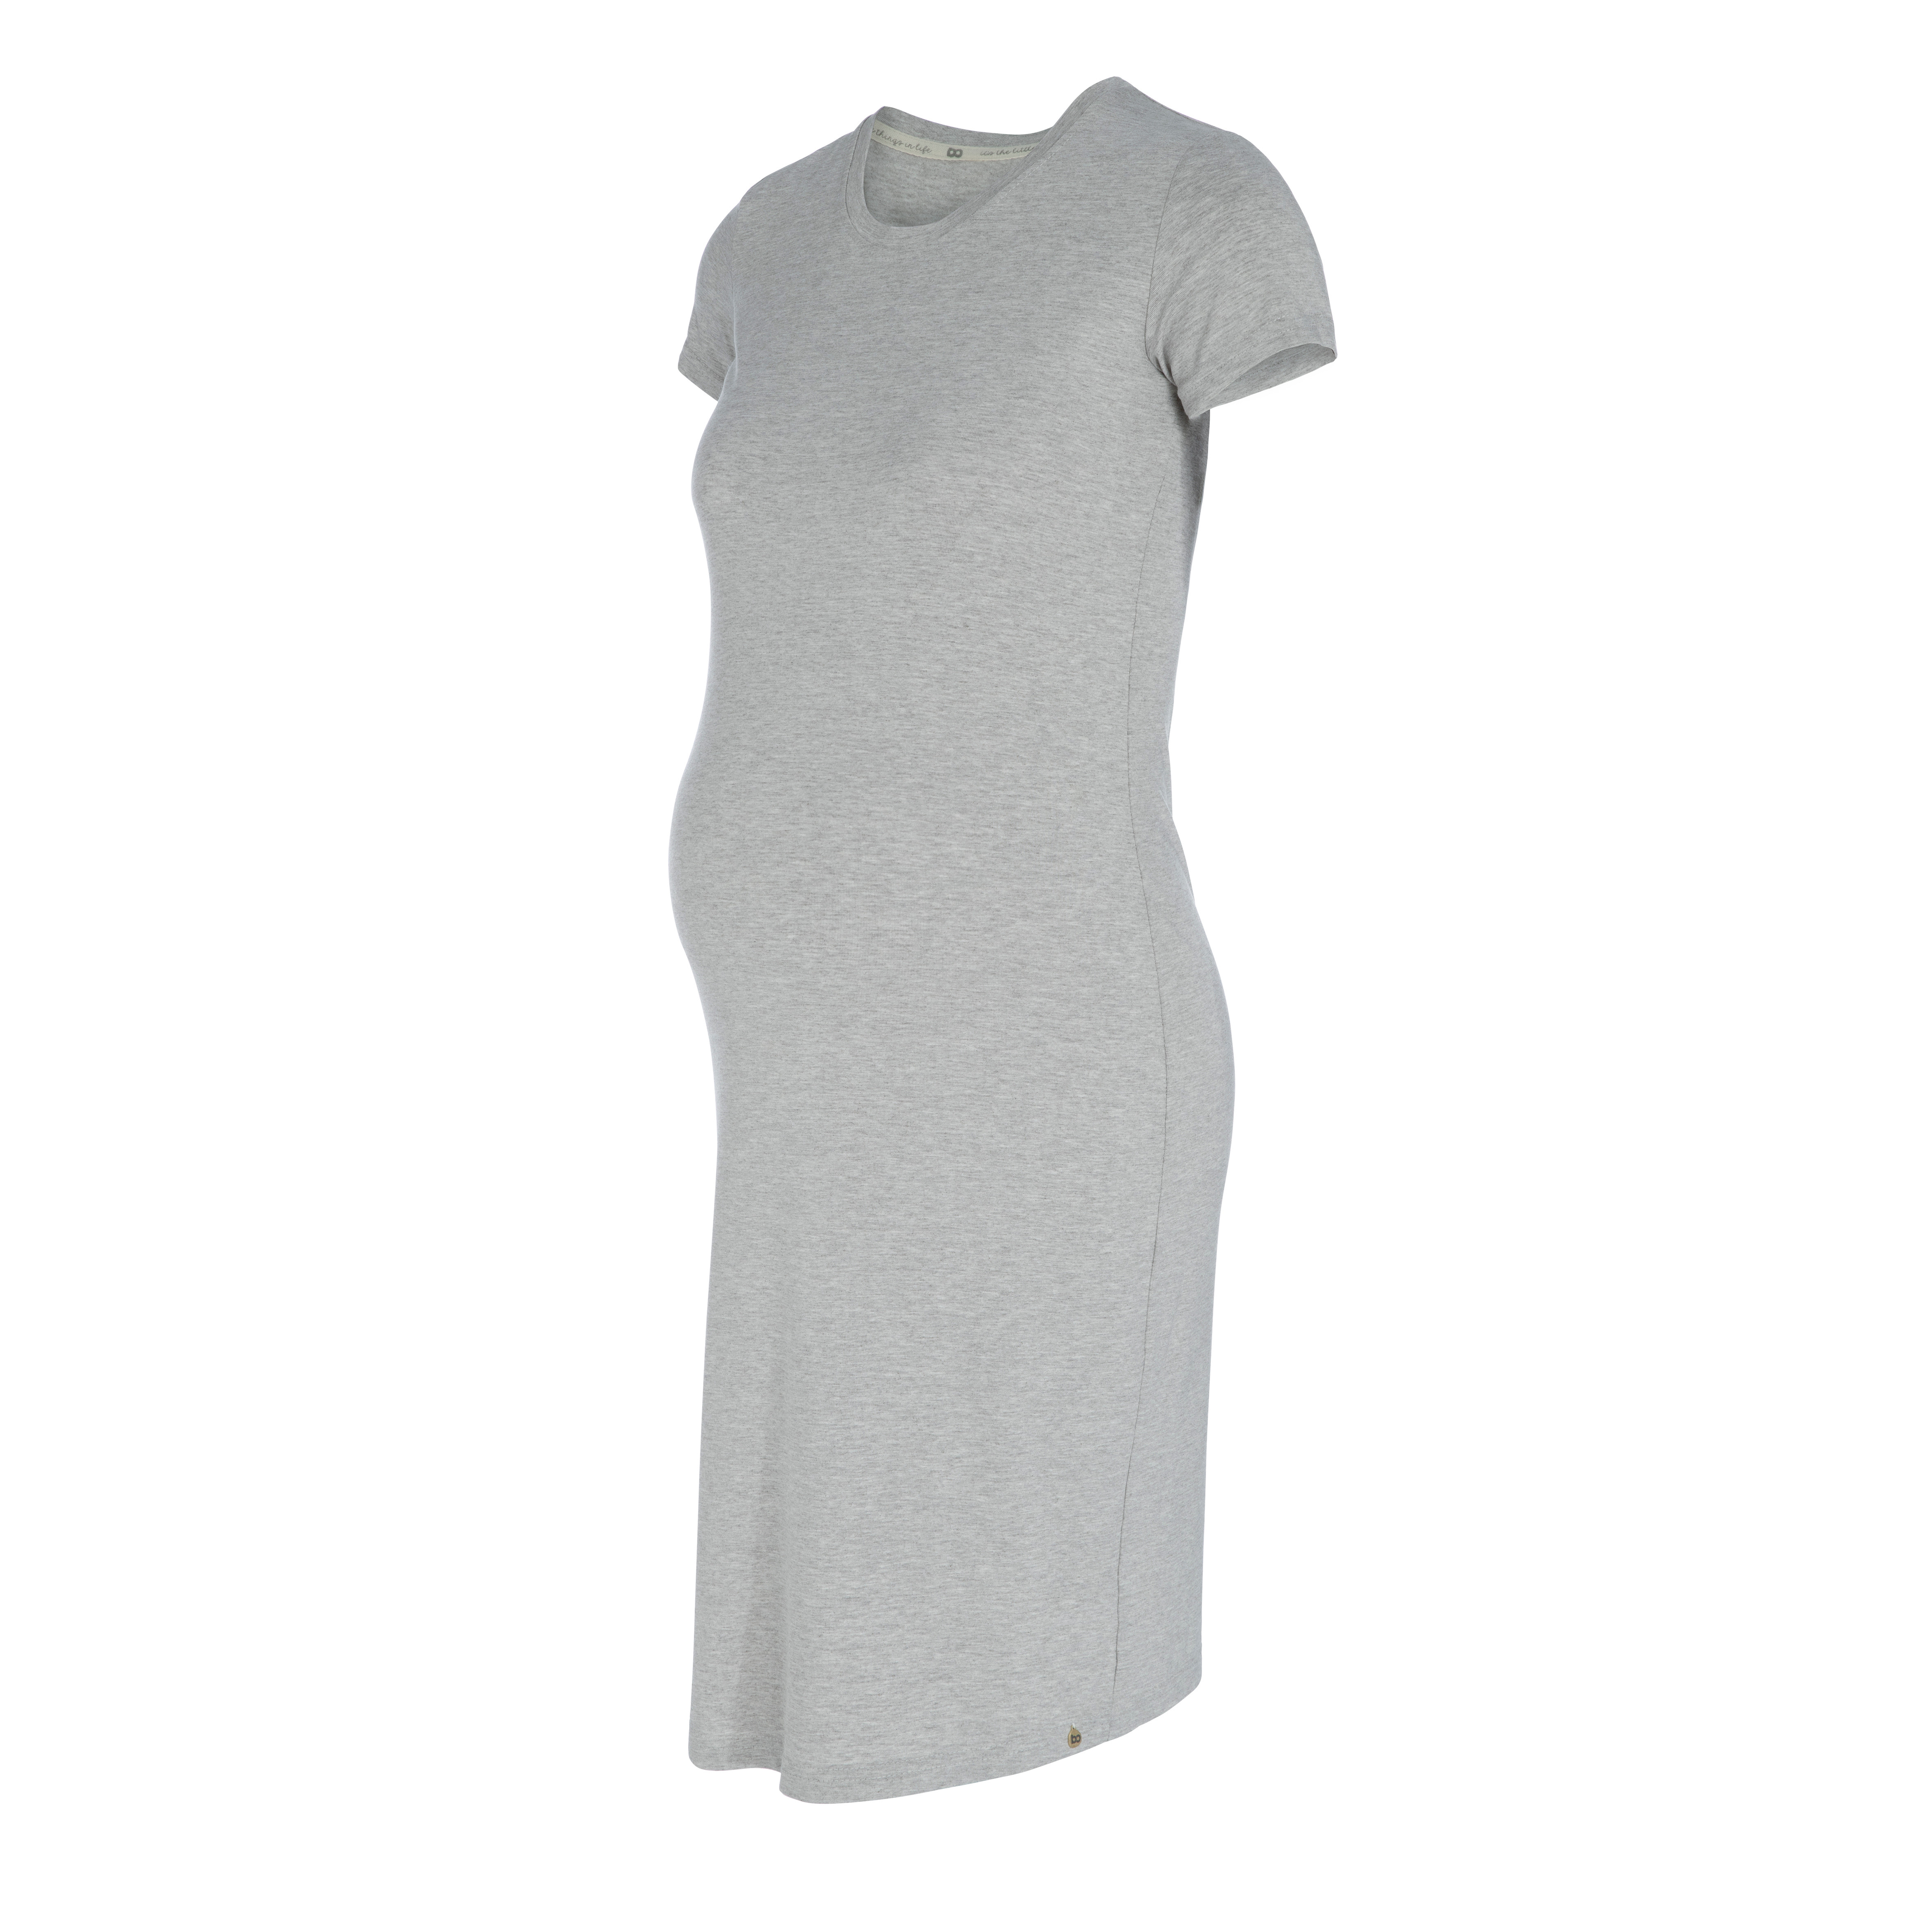 Maternity dress Glow dusty grey - L